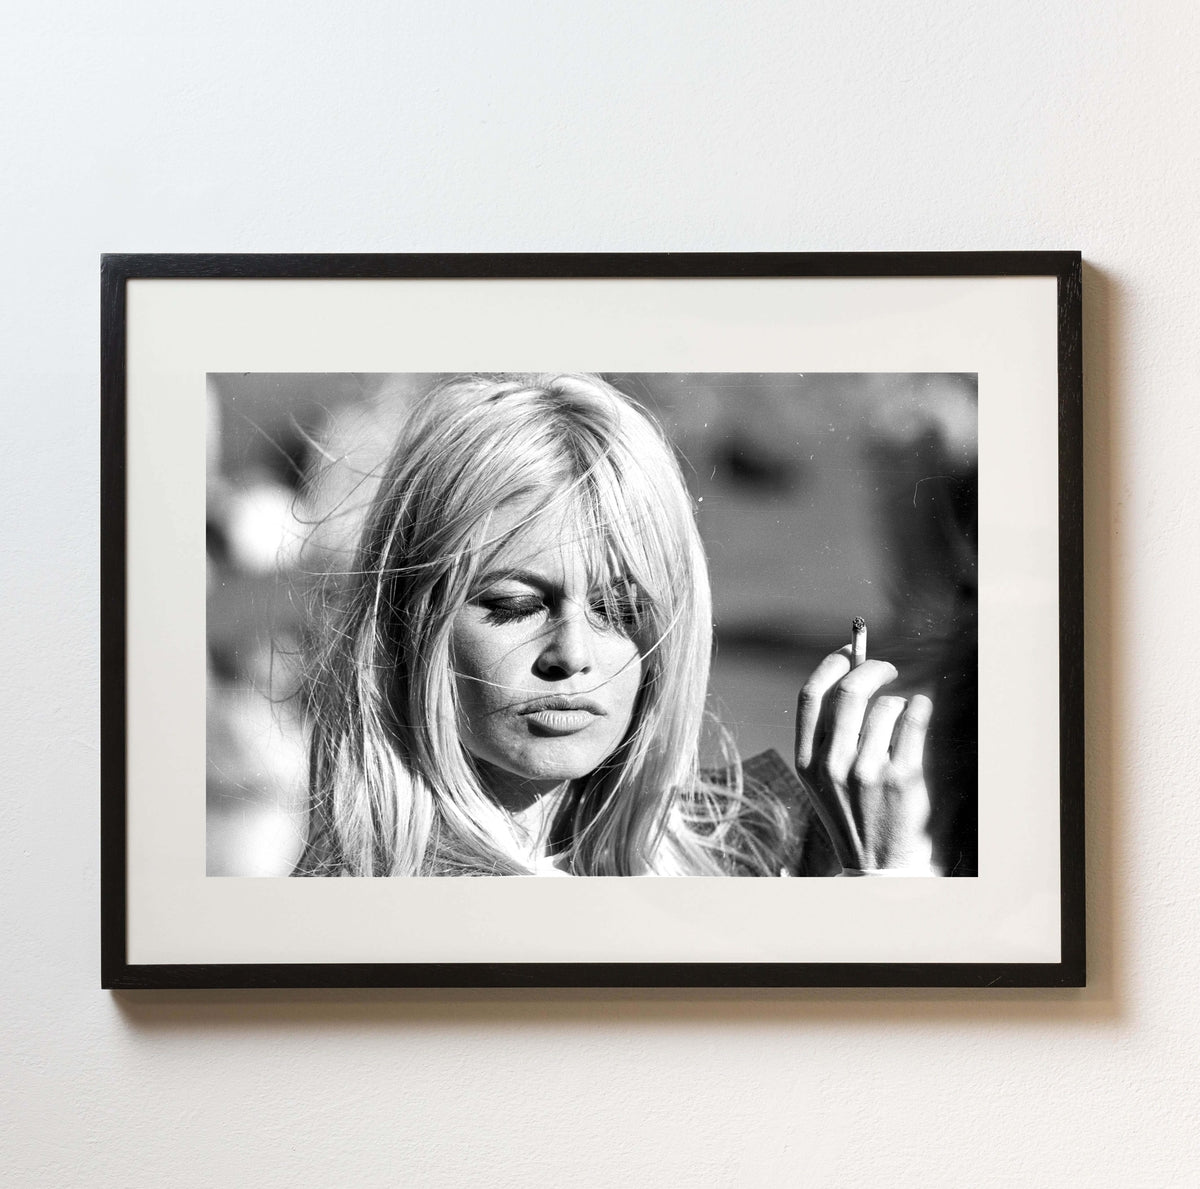 Framed: Bridget Bardot by Michael Ochs Photo for sale Getty Images Gallery